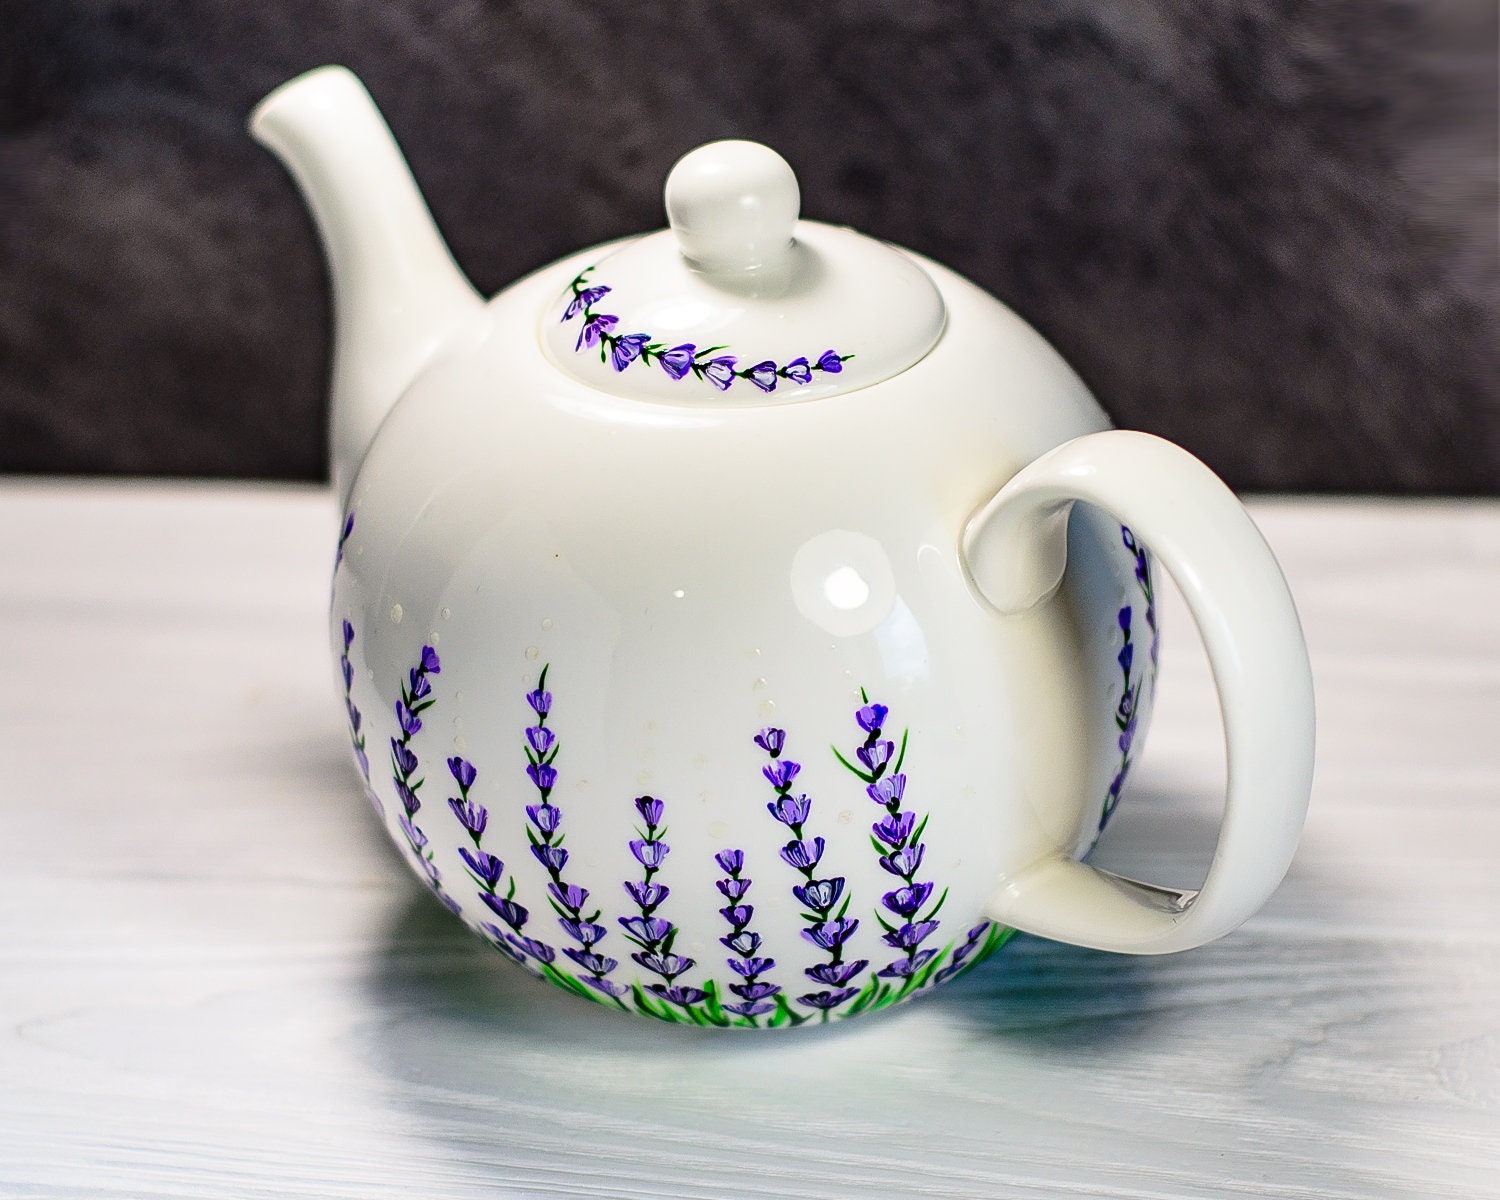 Personalized Teapot Mushroom Tea Pot for Grandma, Mothers Day Gift